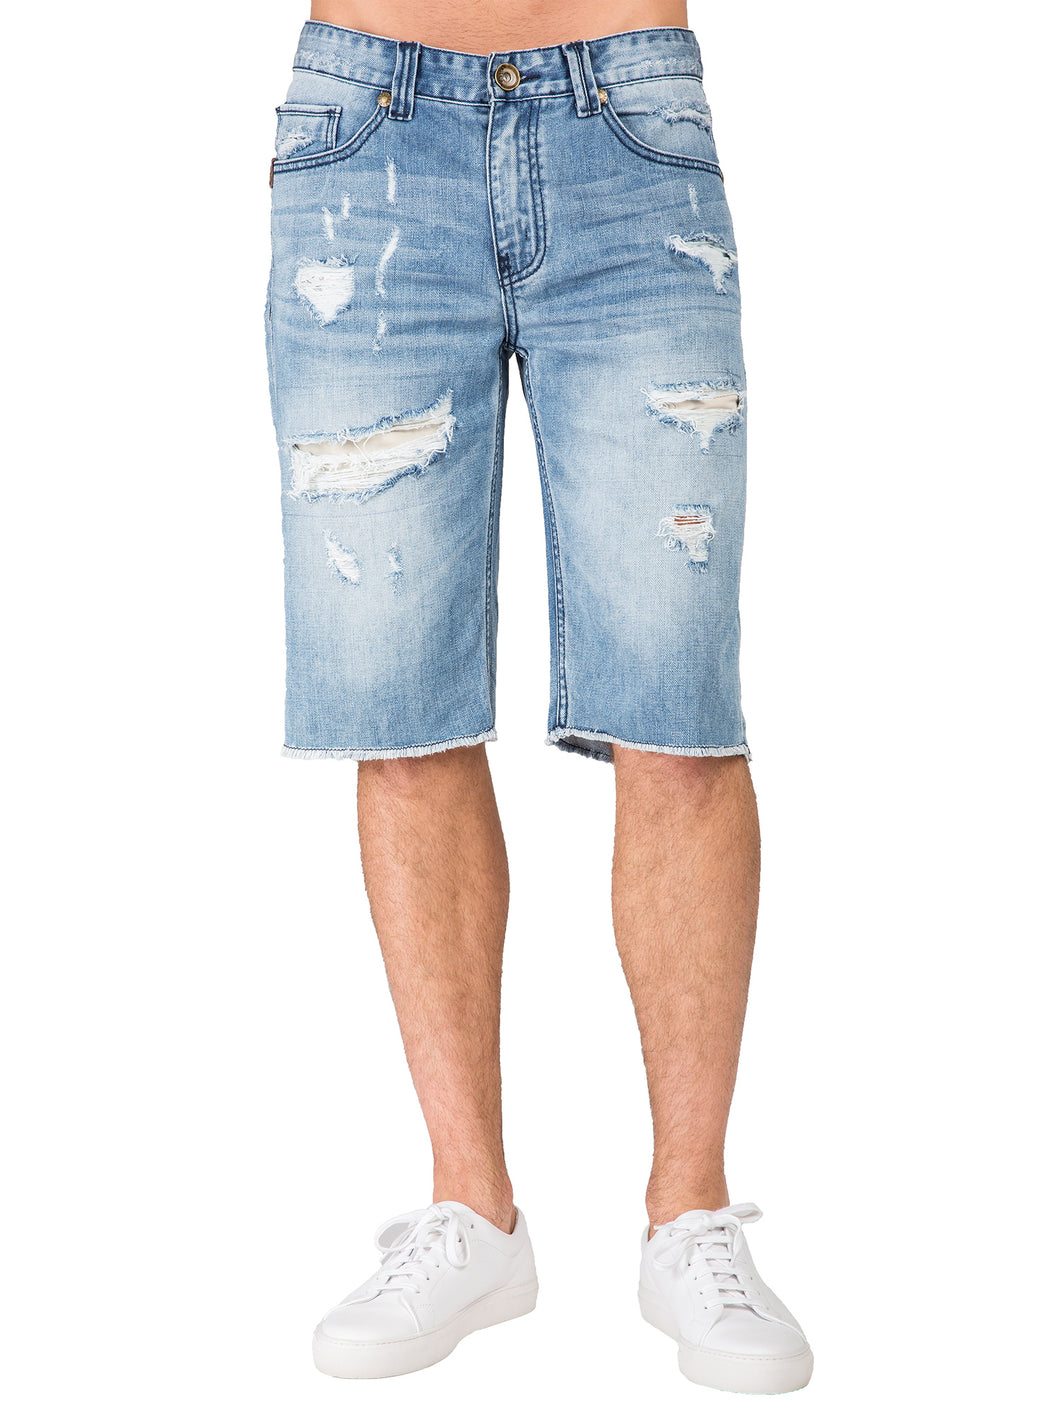 Men's Premium Denim Shorts Light Blue Distressed Mended Raw Edge 13